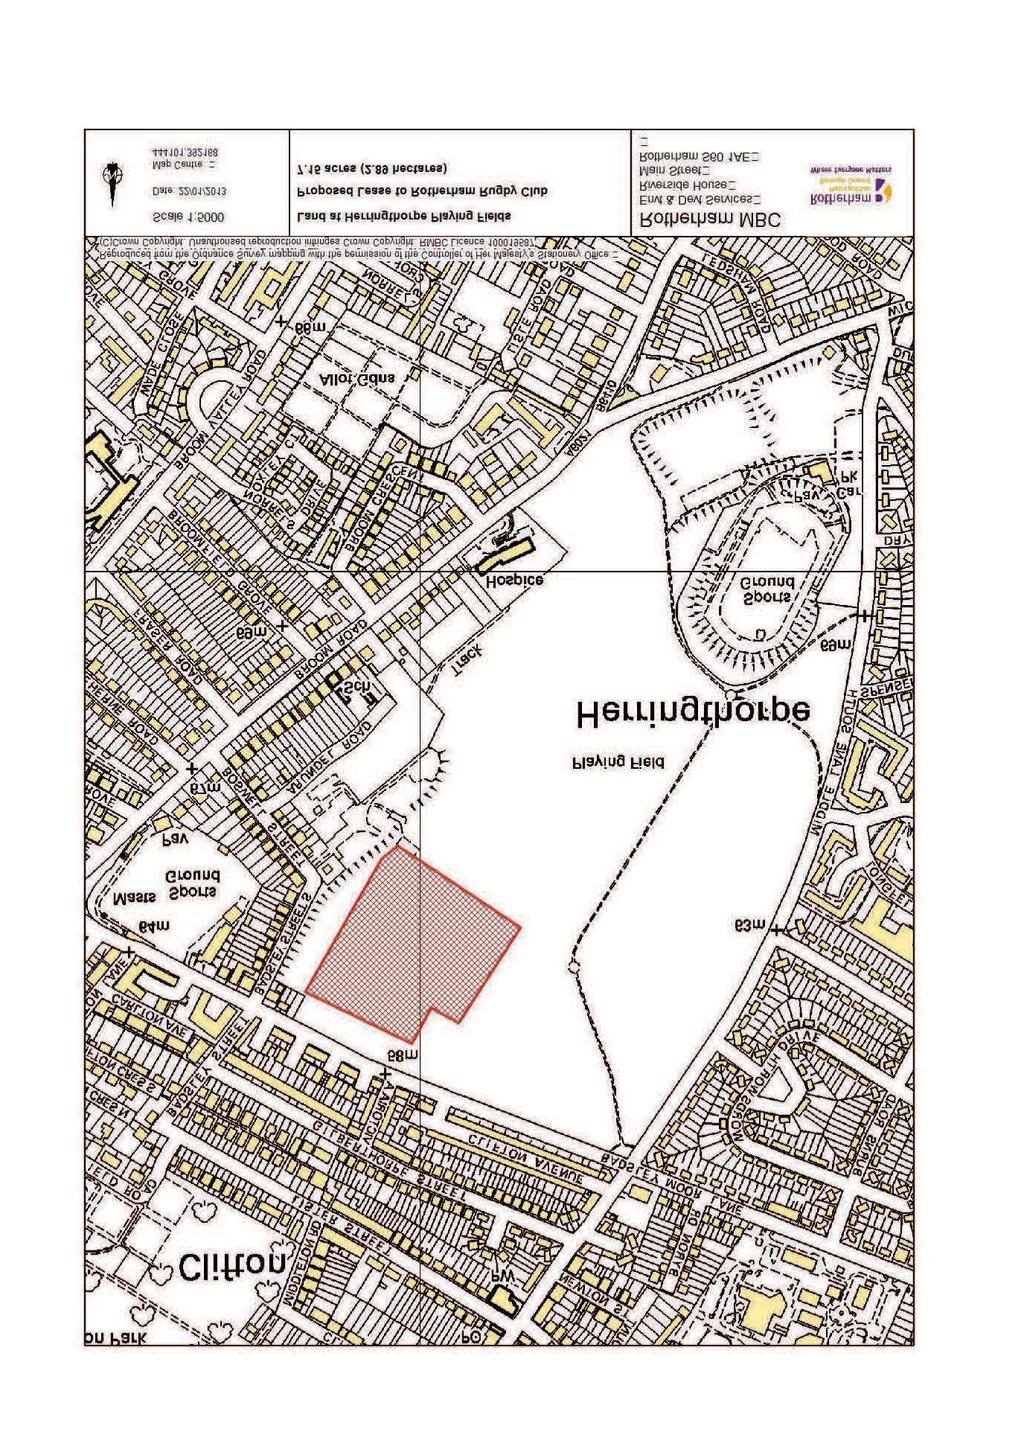 PHOENIX RUFC Figure 1 - Location of Proposed Rotherham